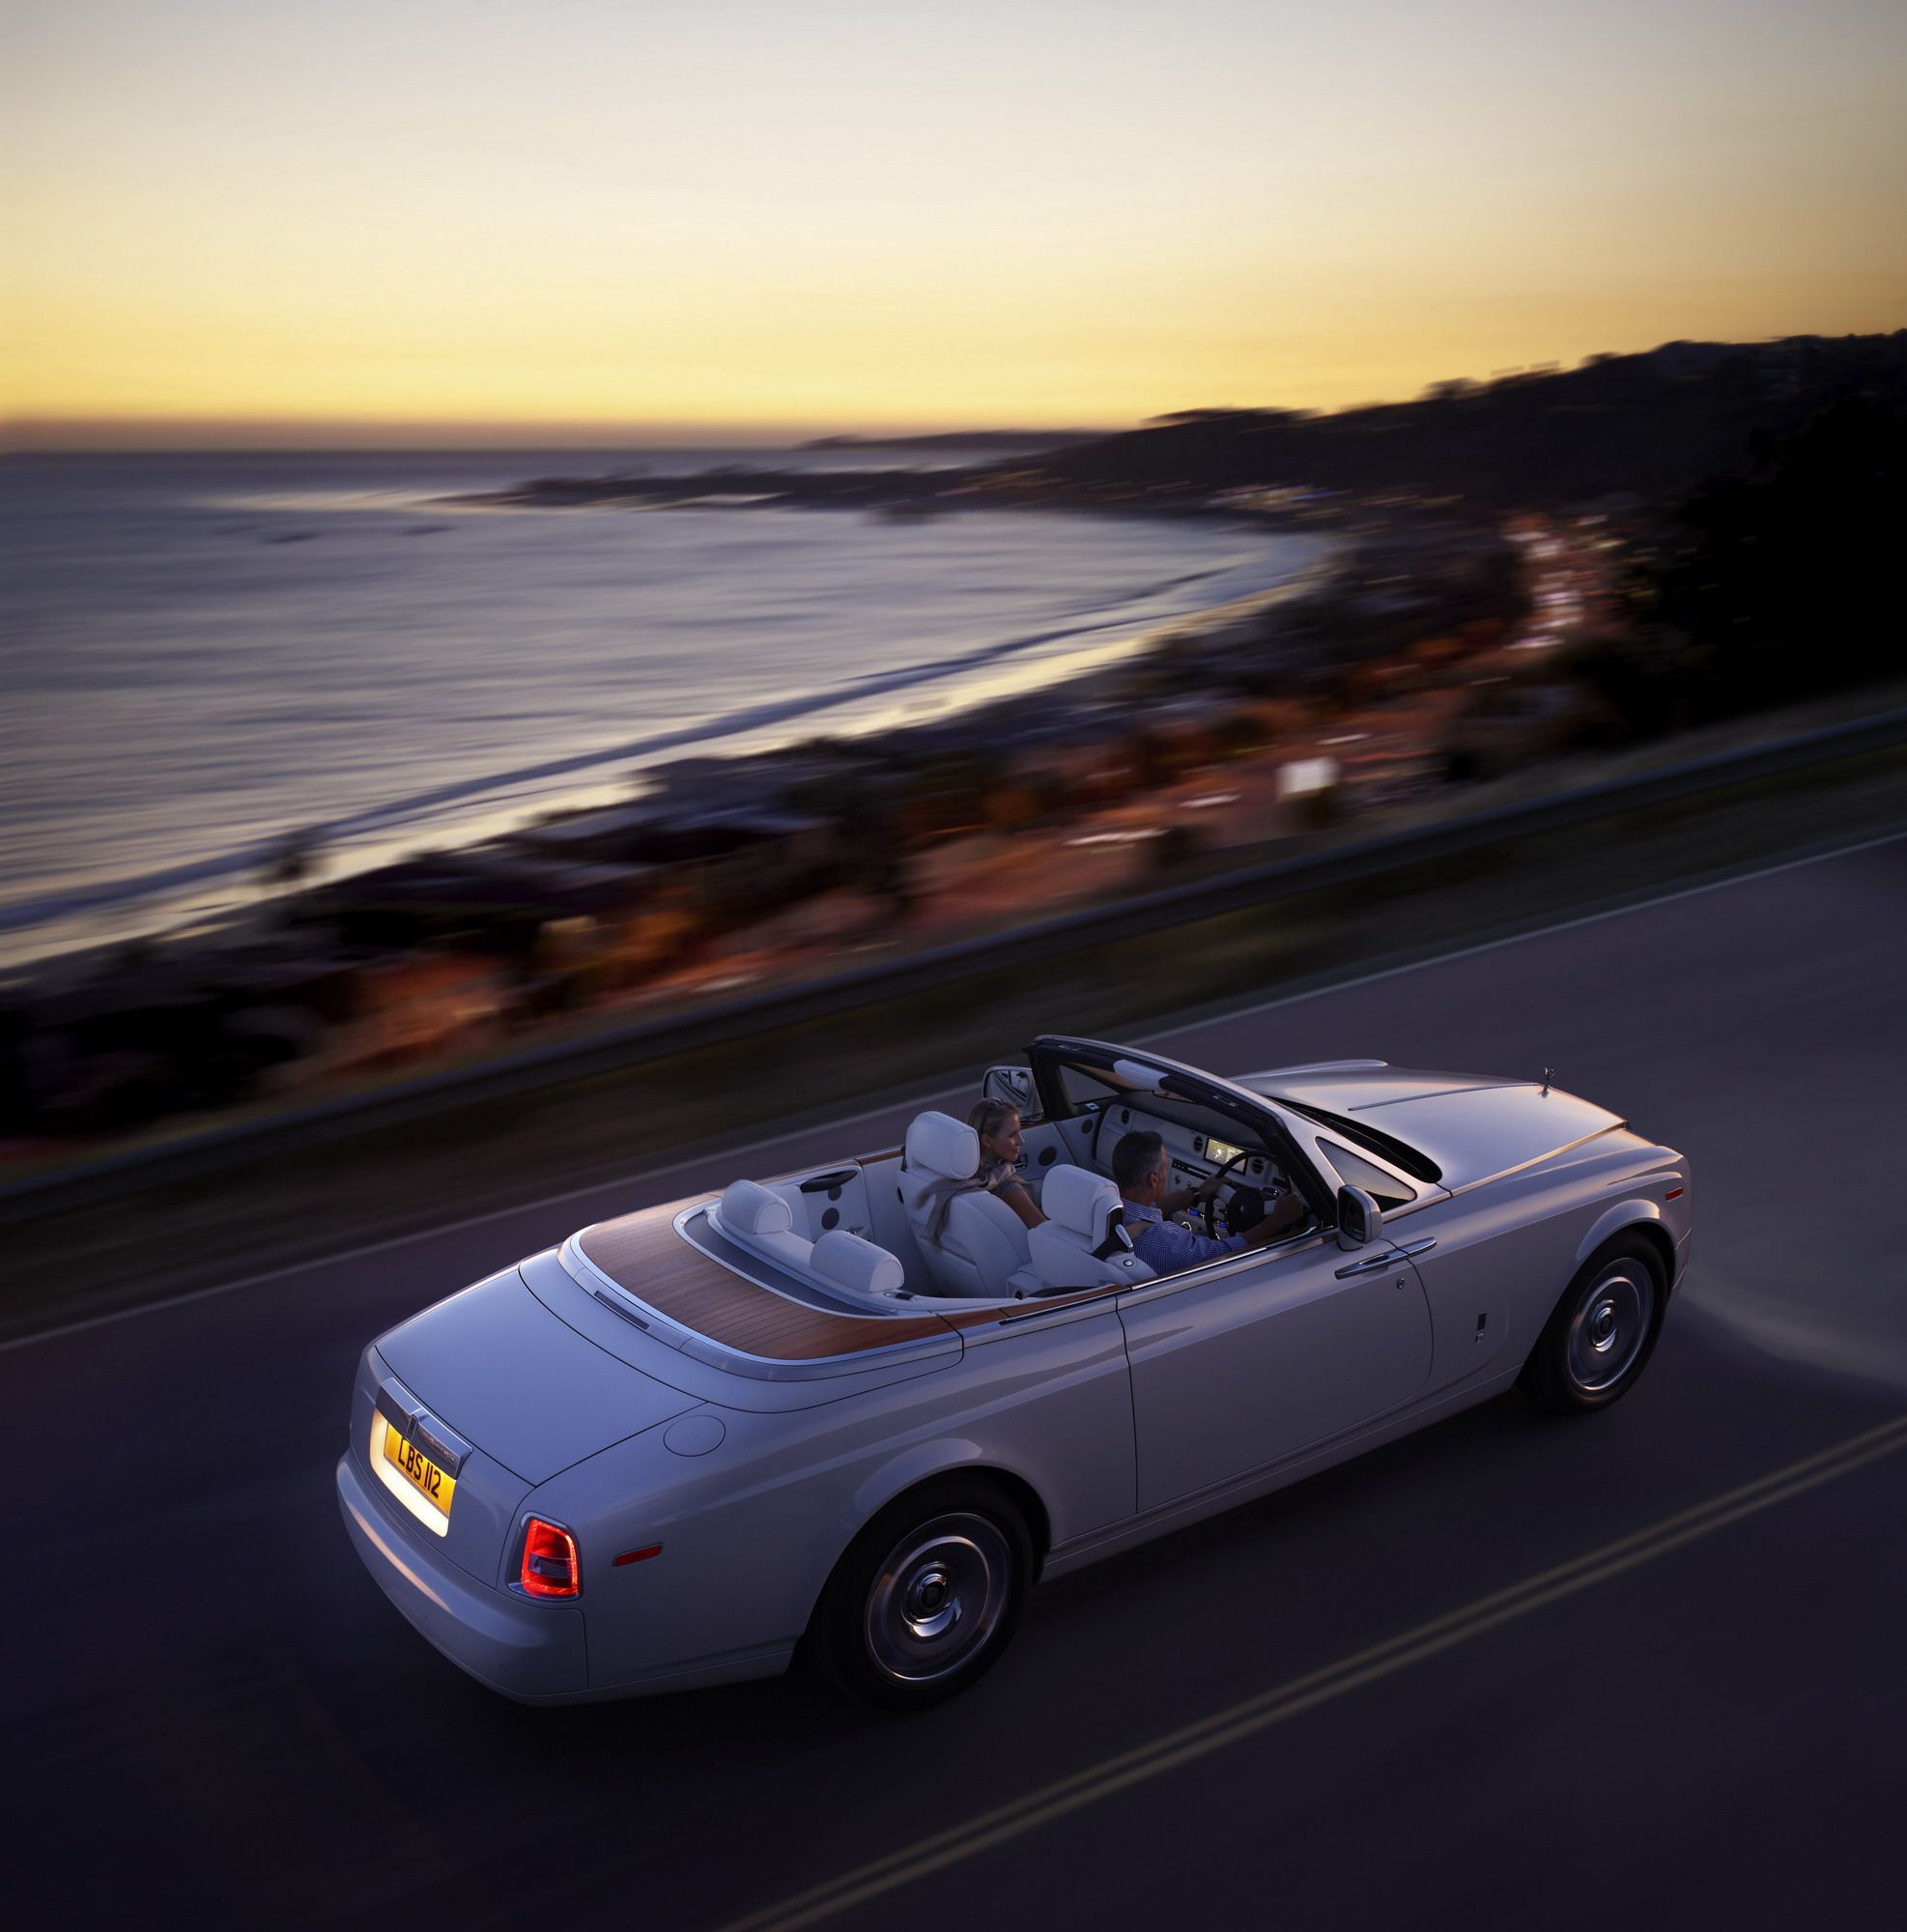 2013 Roll Royce Phantom Drophead Coupe Series II